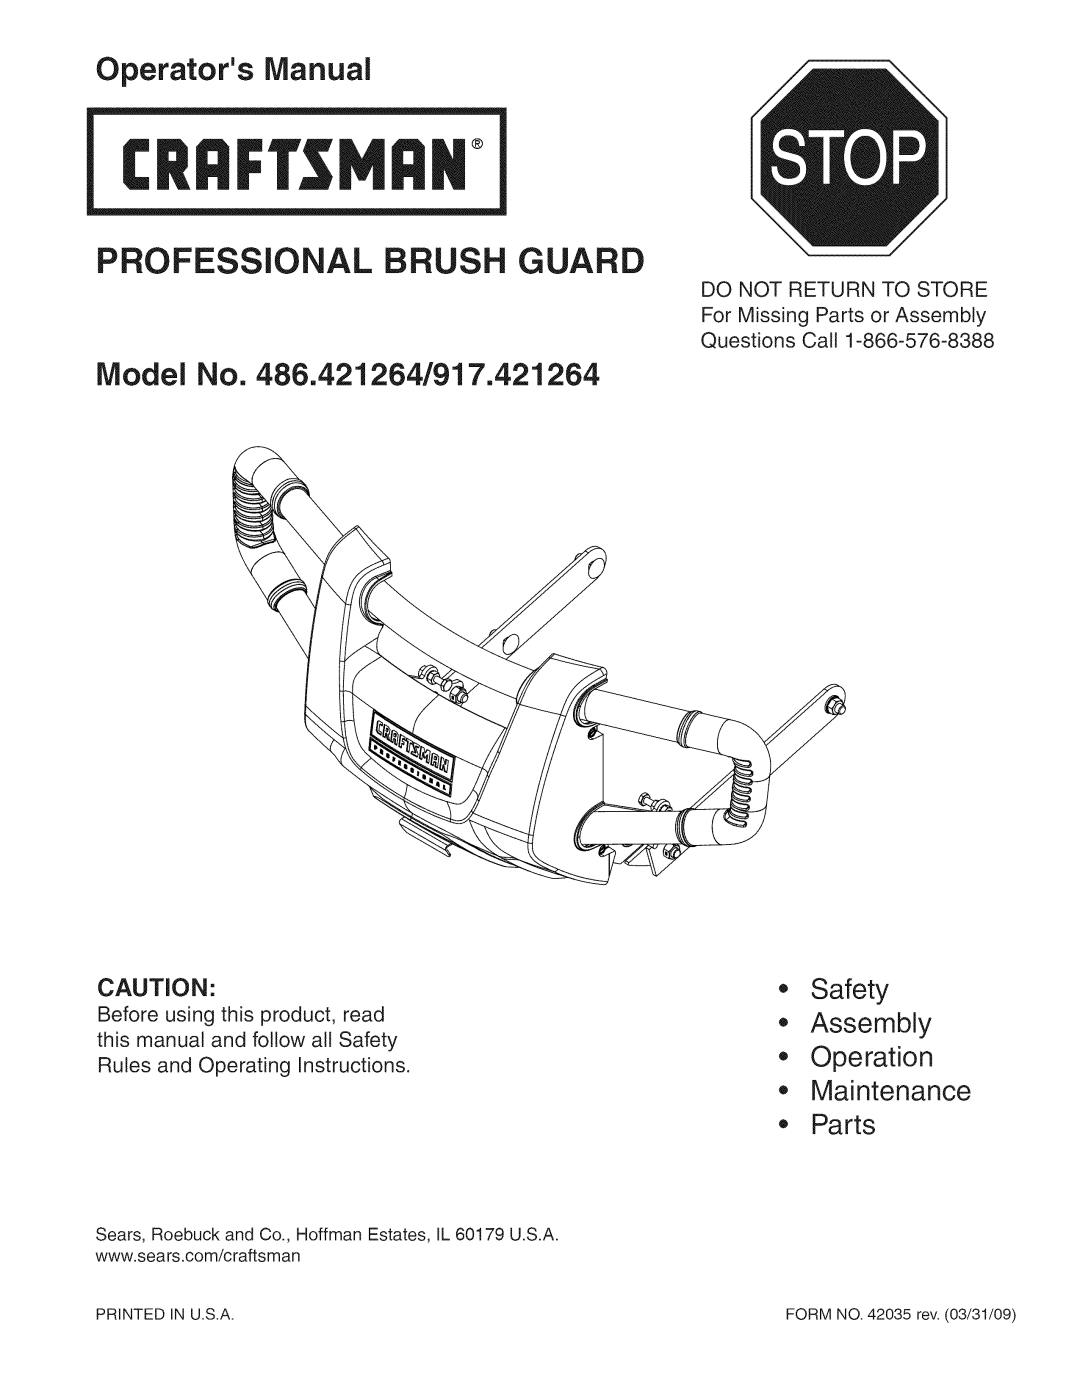 Craftsman manual Model No. 486.421264/917.421264, Safety Assembly Operation Maintenance Parts, Professional Brush Guard 